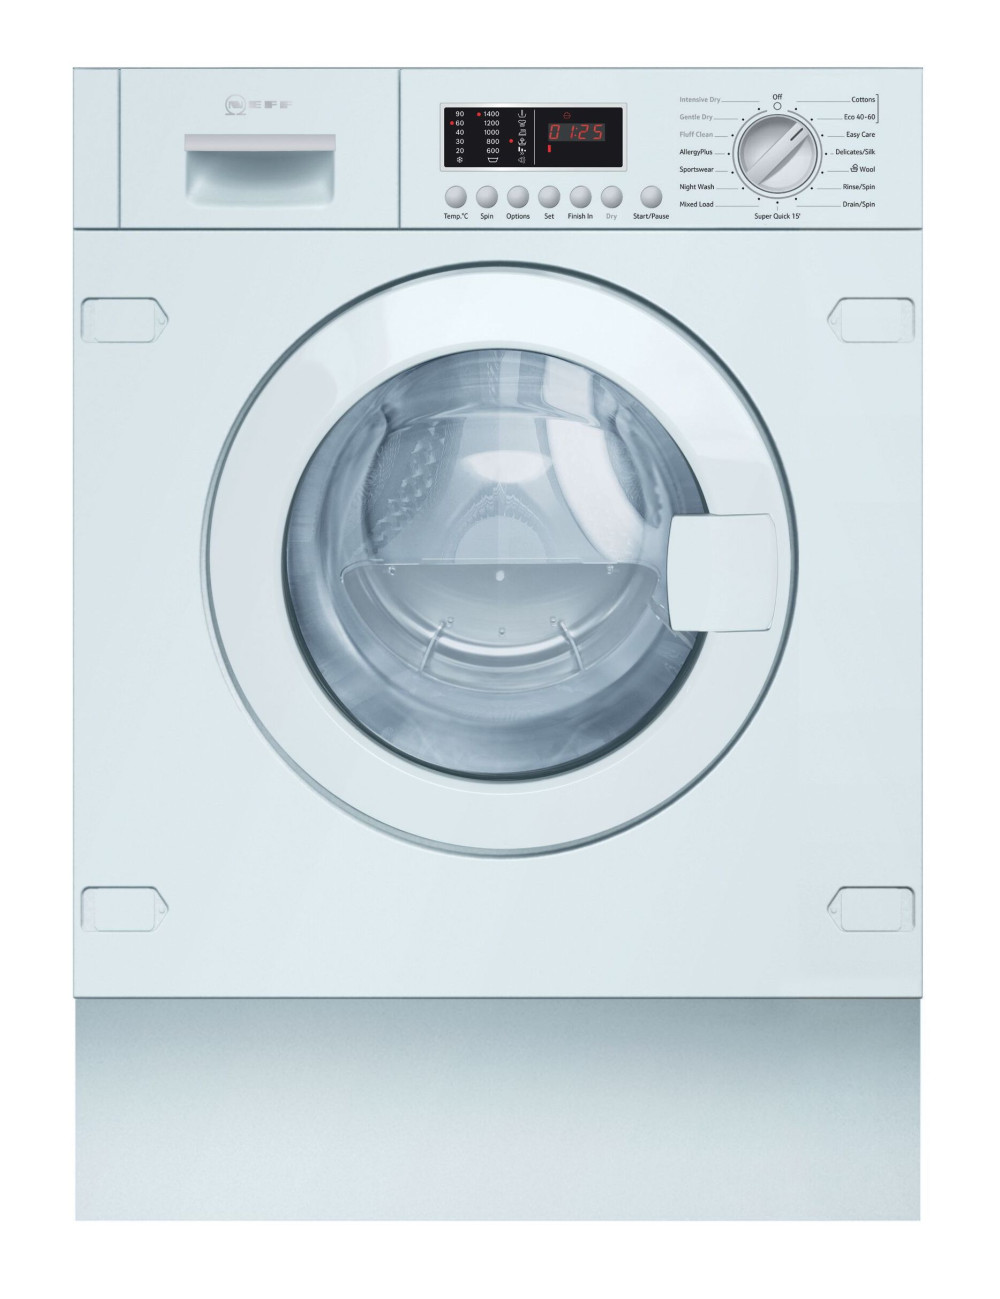 NEFF V6540X2GB 7kg/4kg Washer Dryer featured image